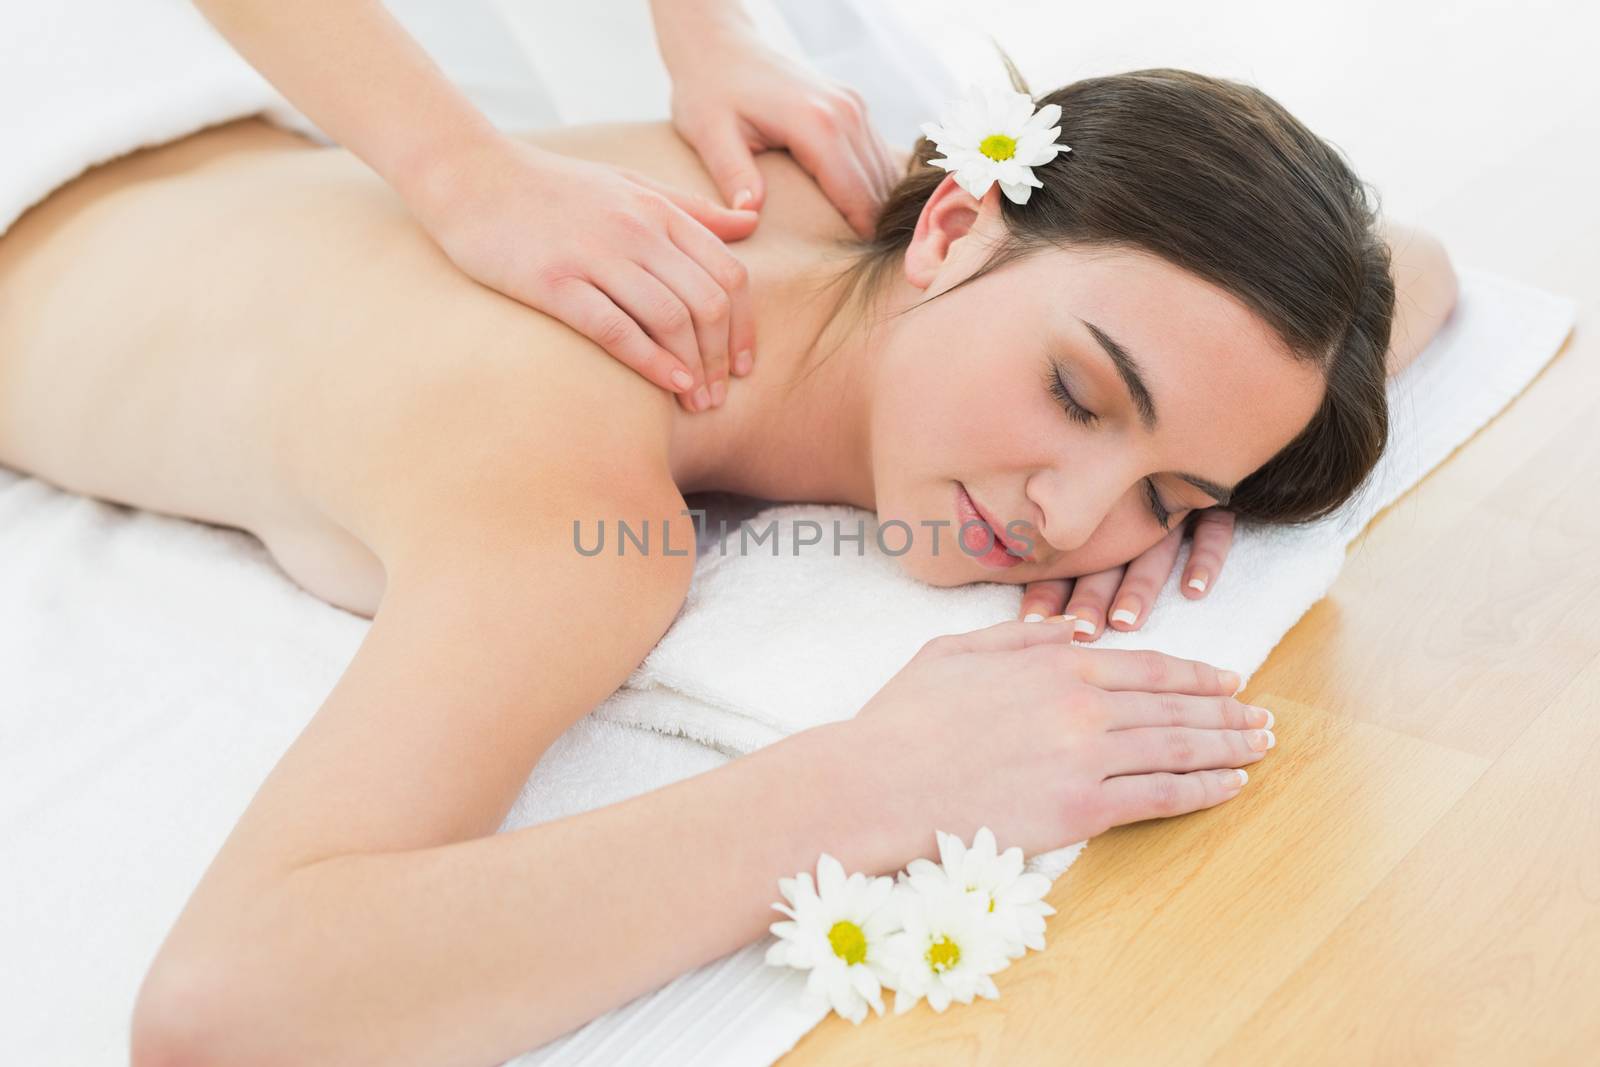 Woman enjoying back massage at beauty spa by Wavebreakmedia